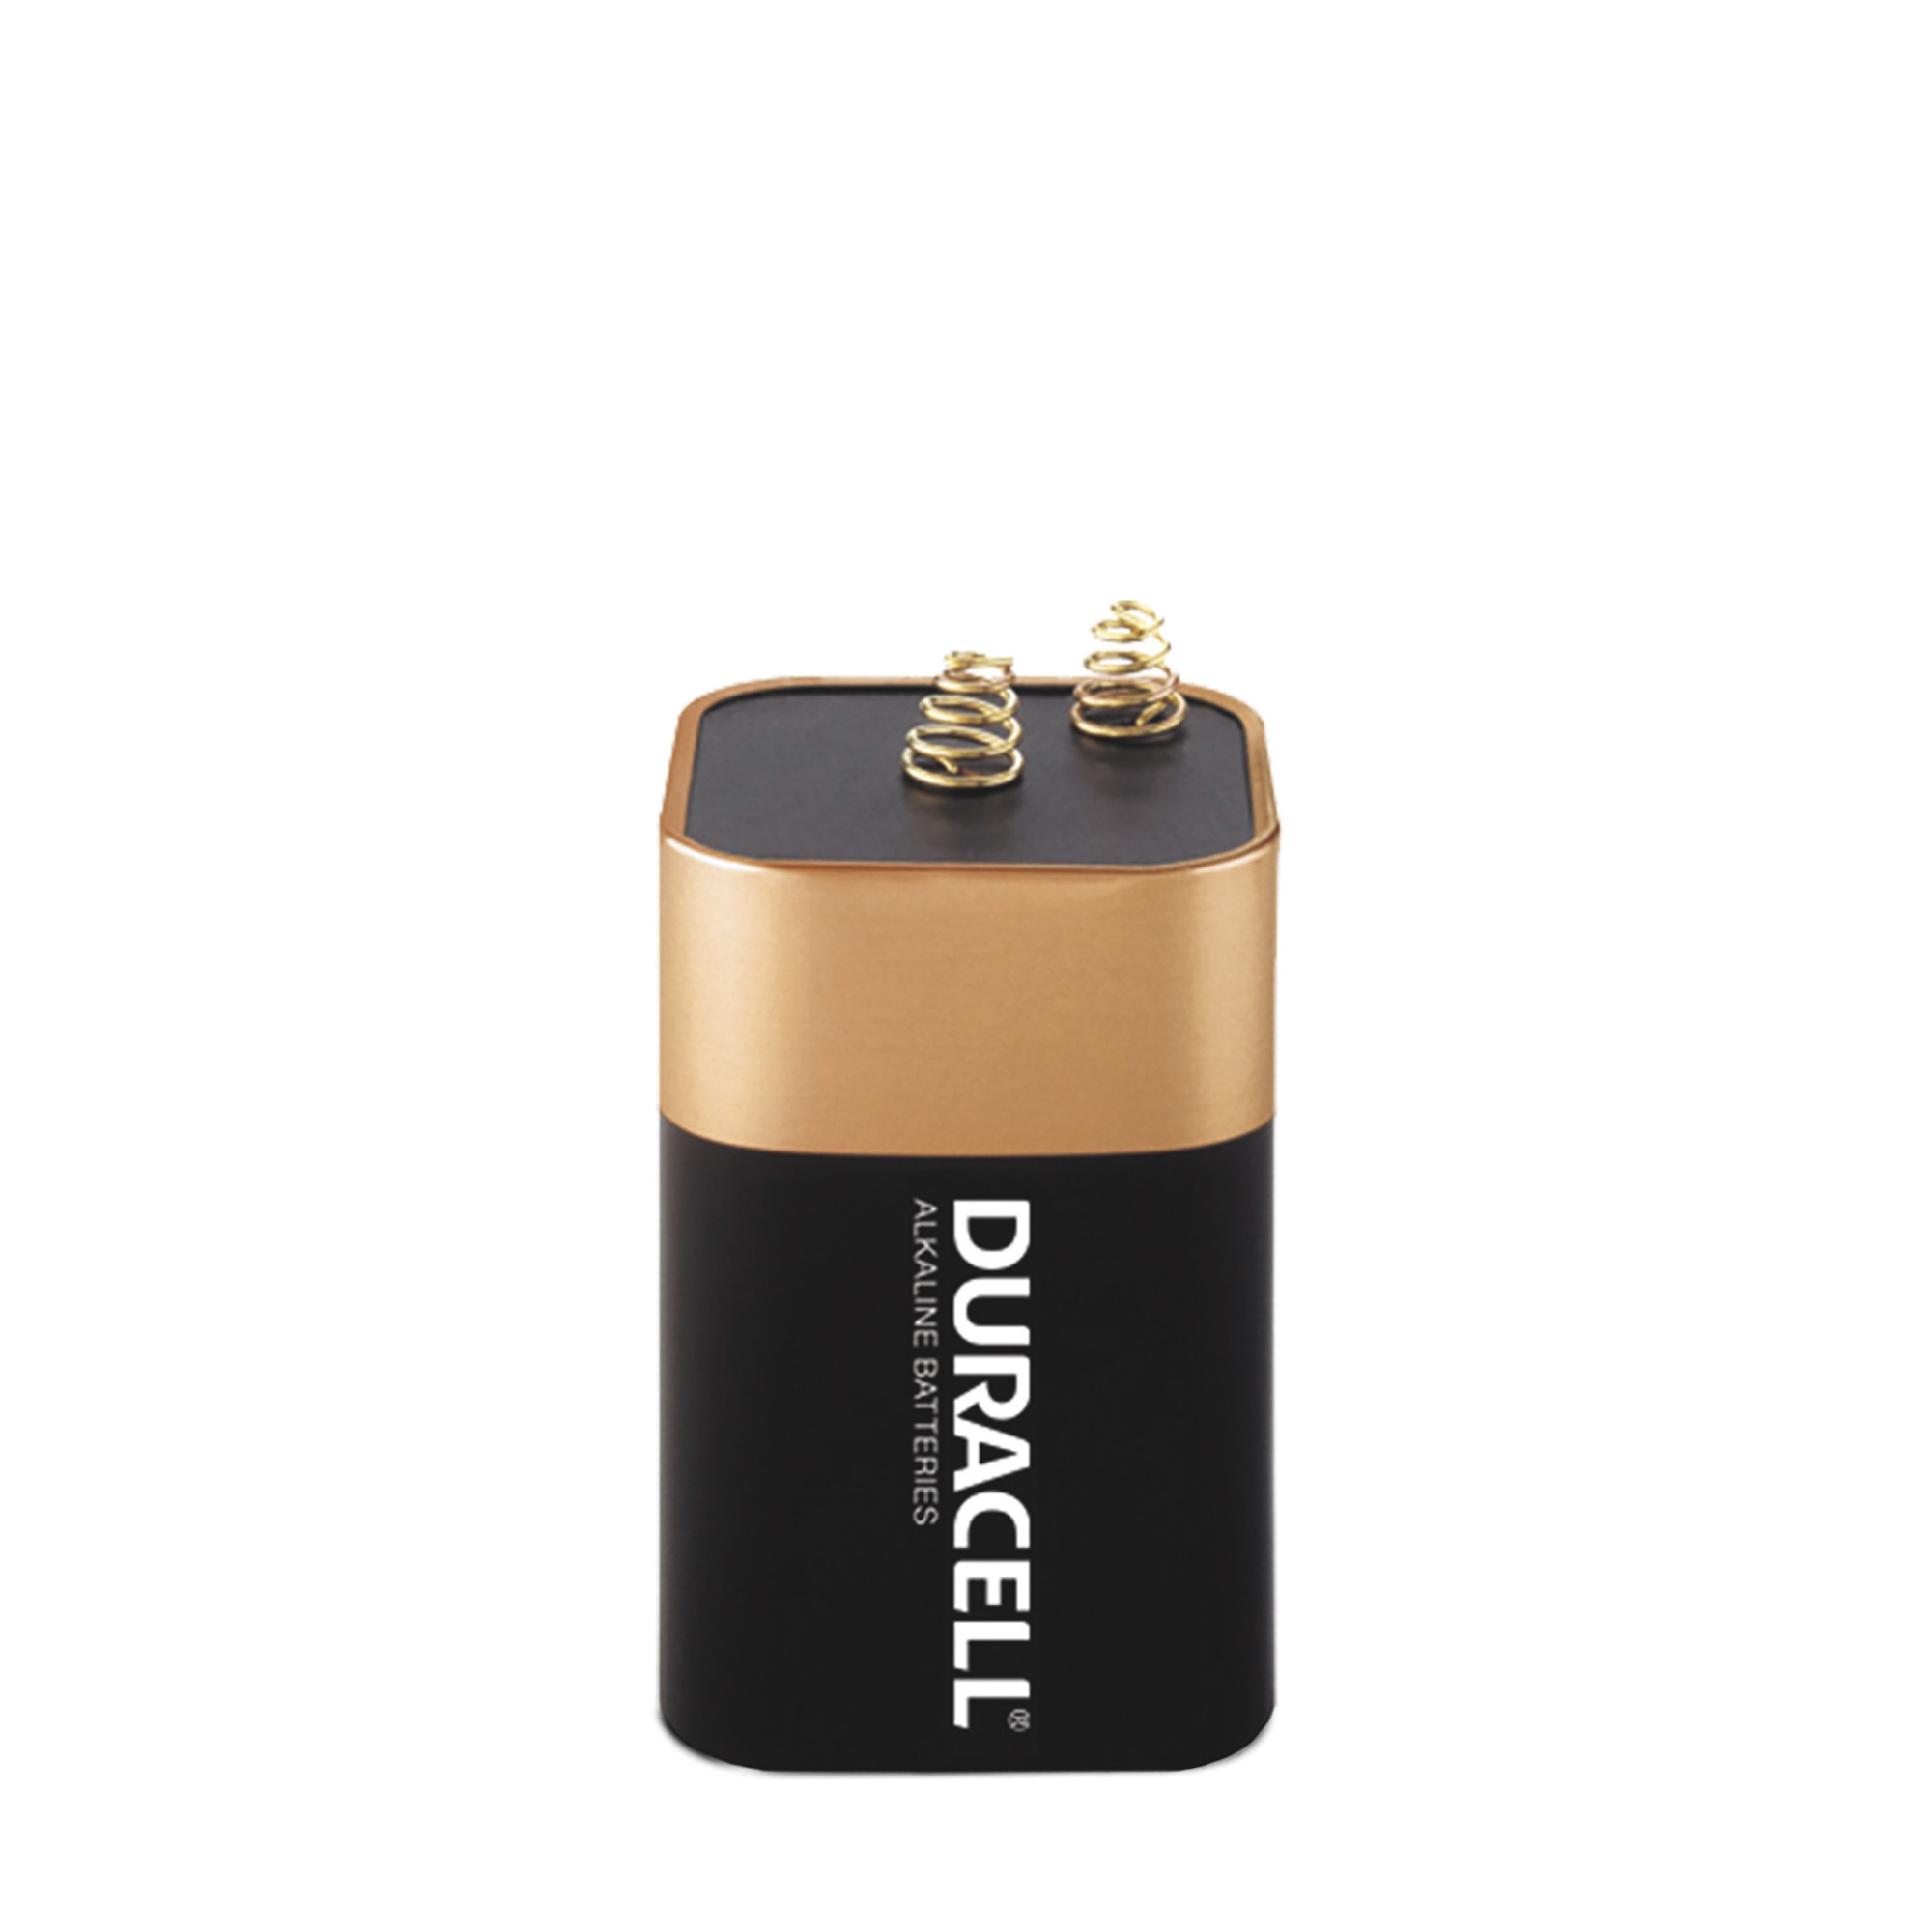 Duracell 6V Alkaline Lantern Battery with Spring Terminals â 1 Count